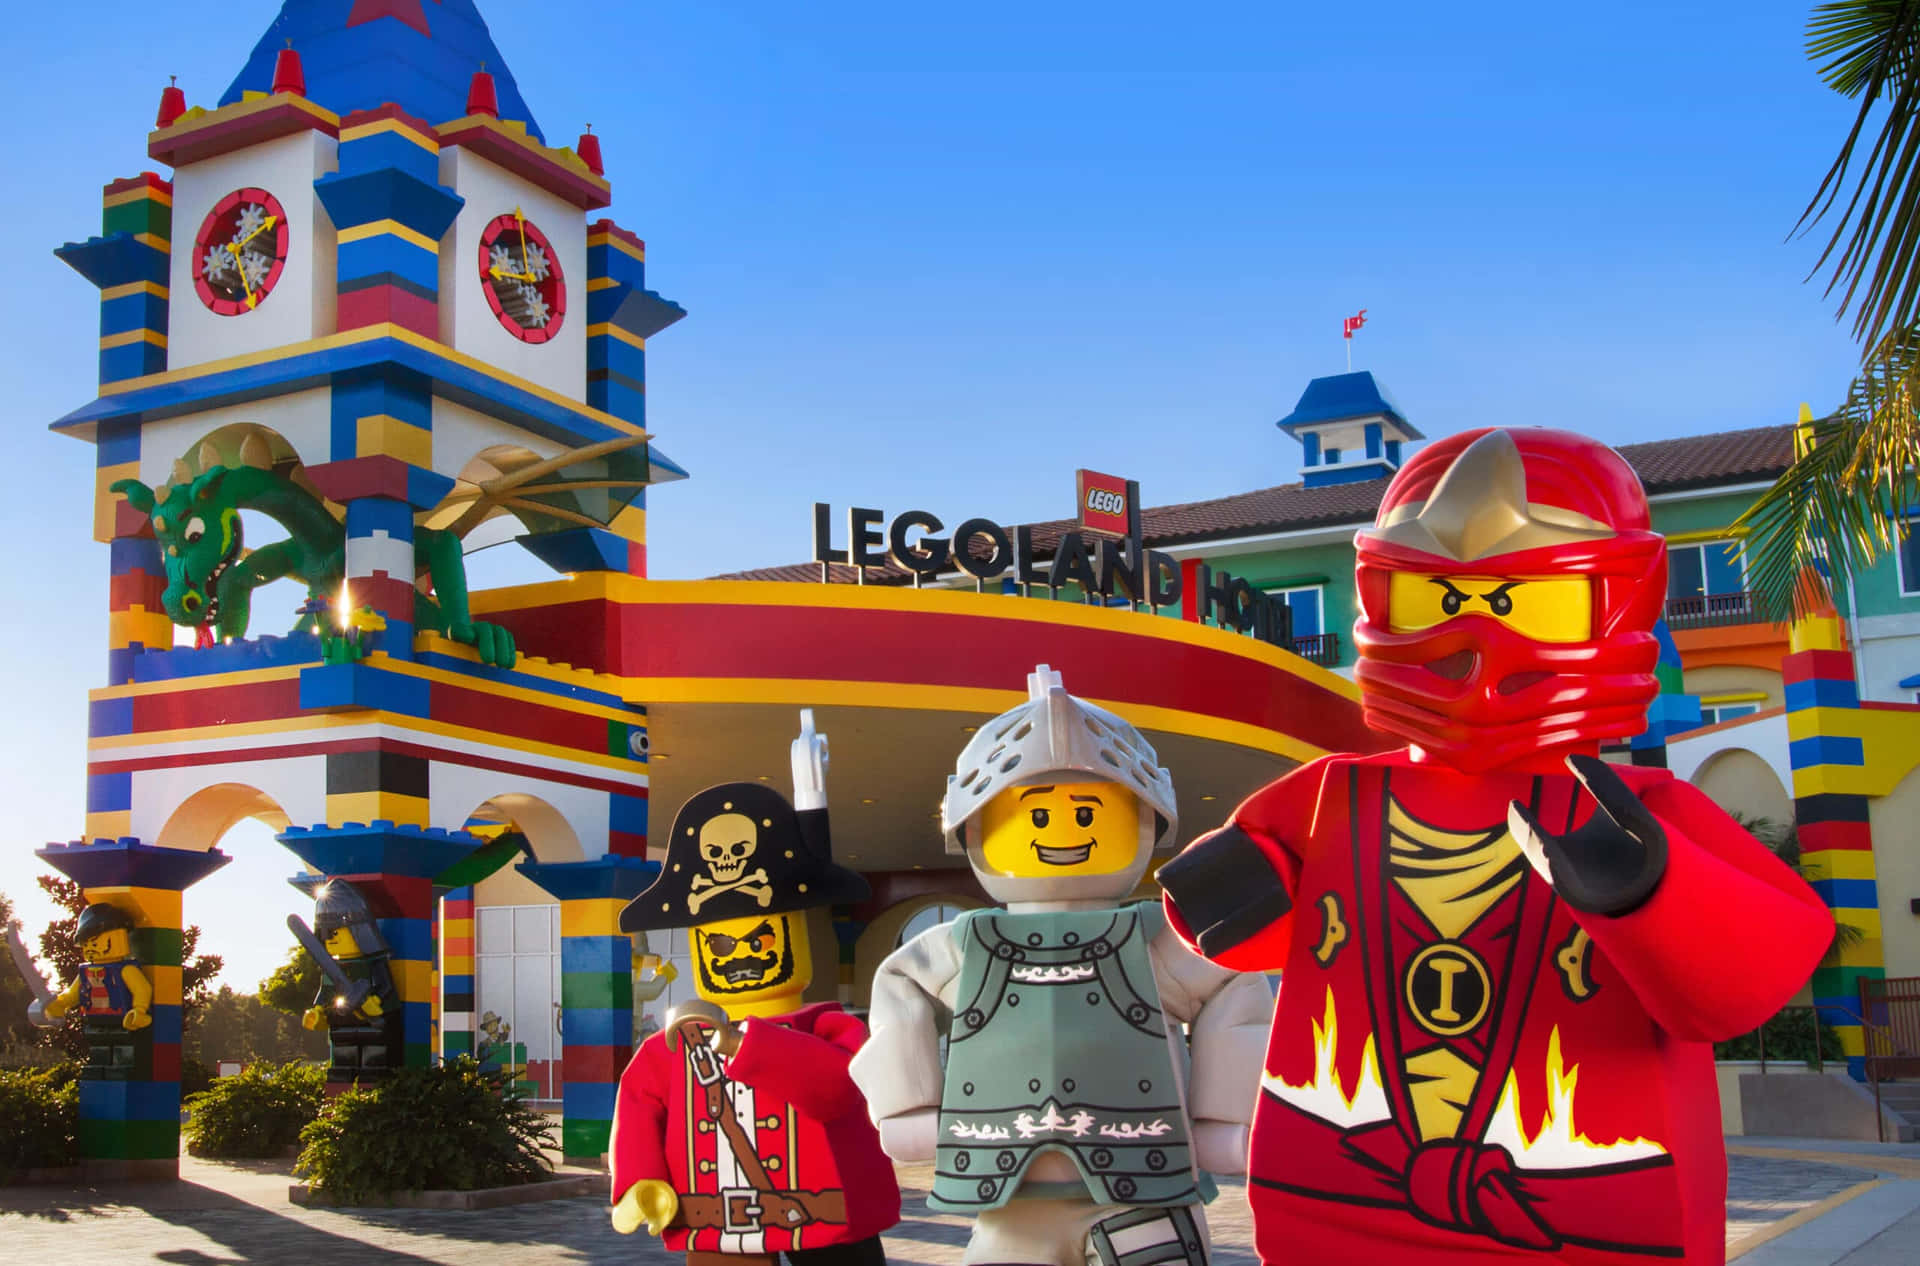 Discover a world of fun at Legoland